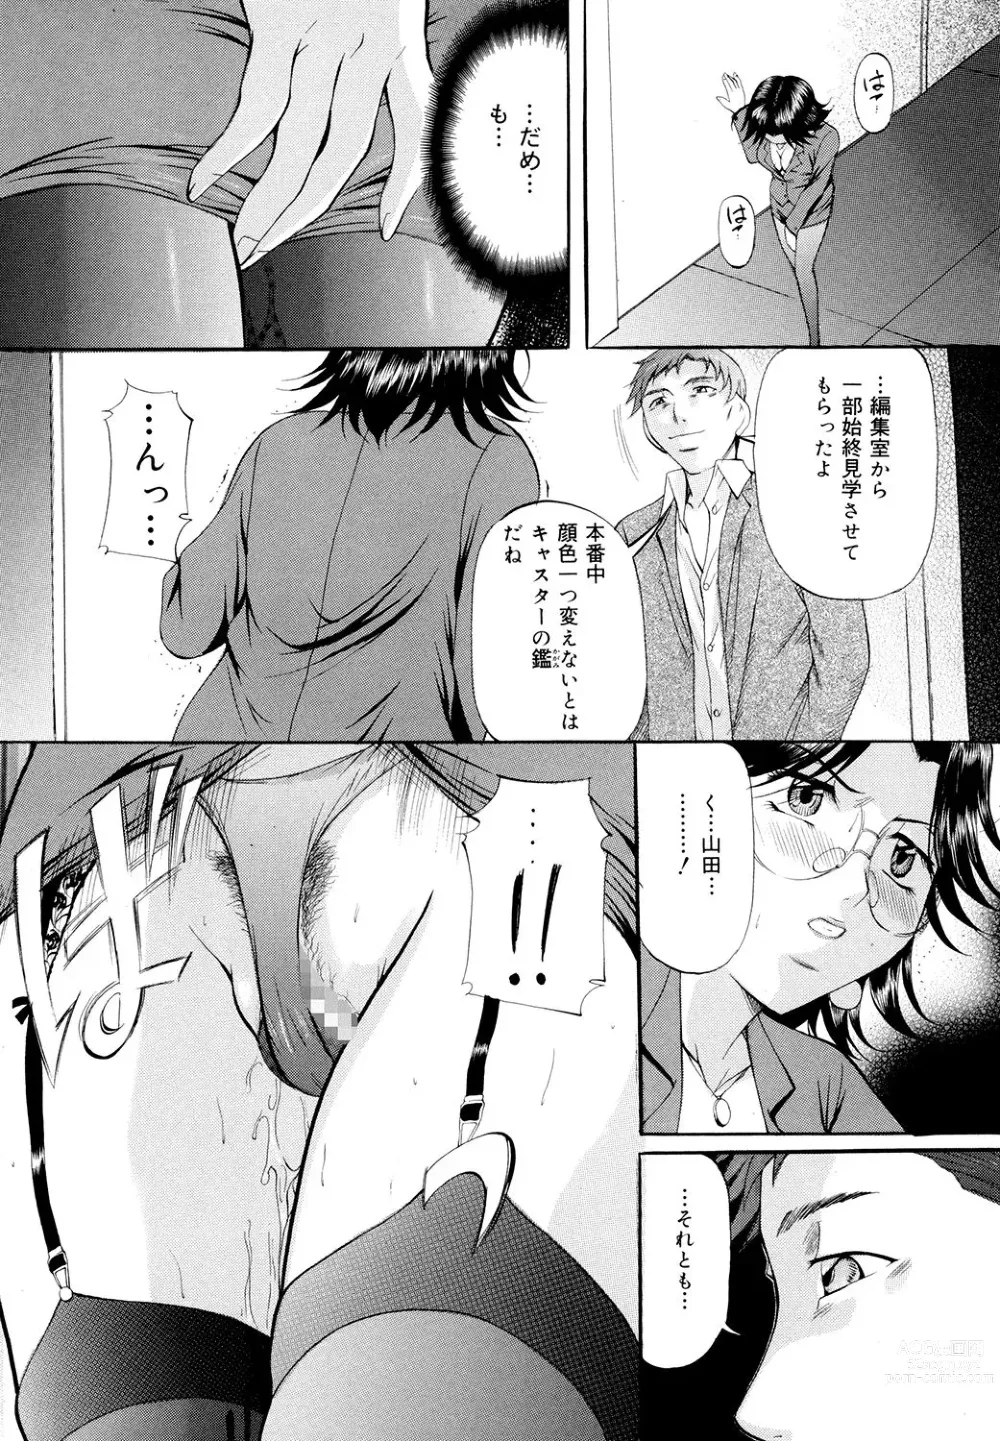 Page 146 of manga Kyonyuu Korogashi